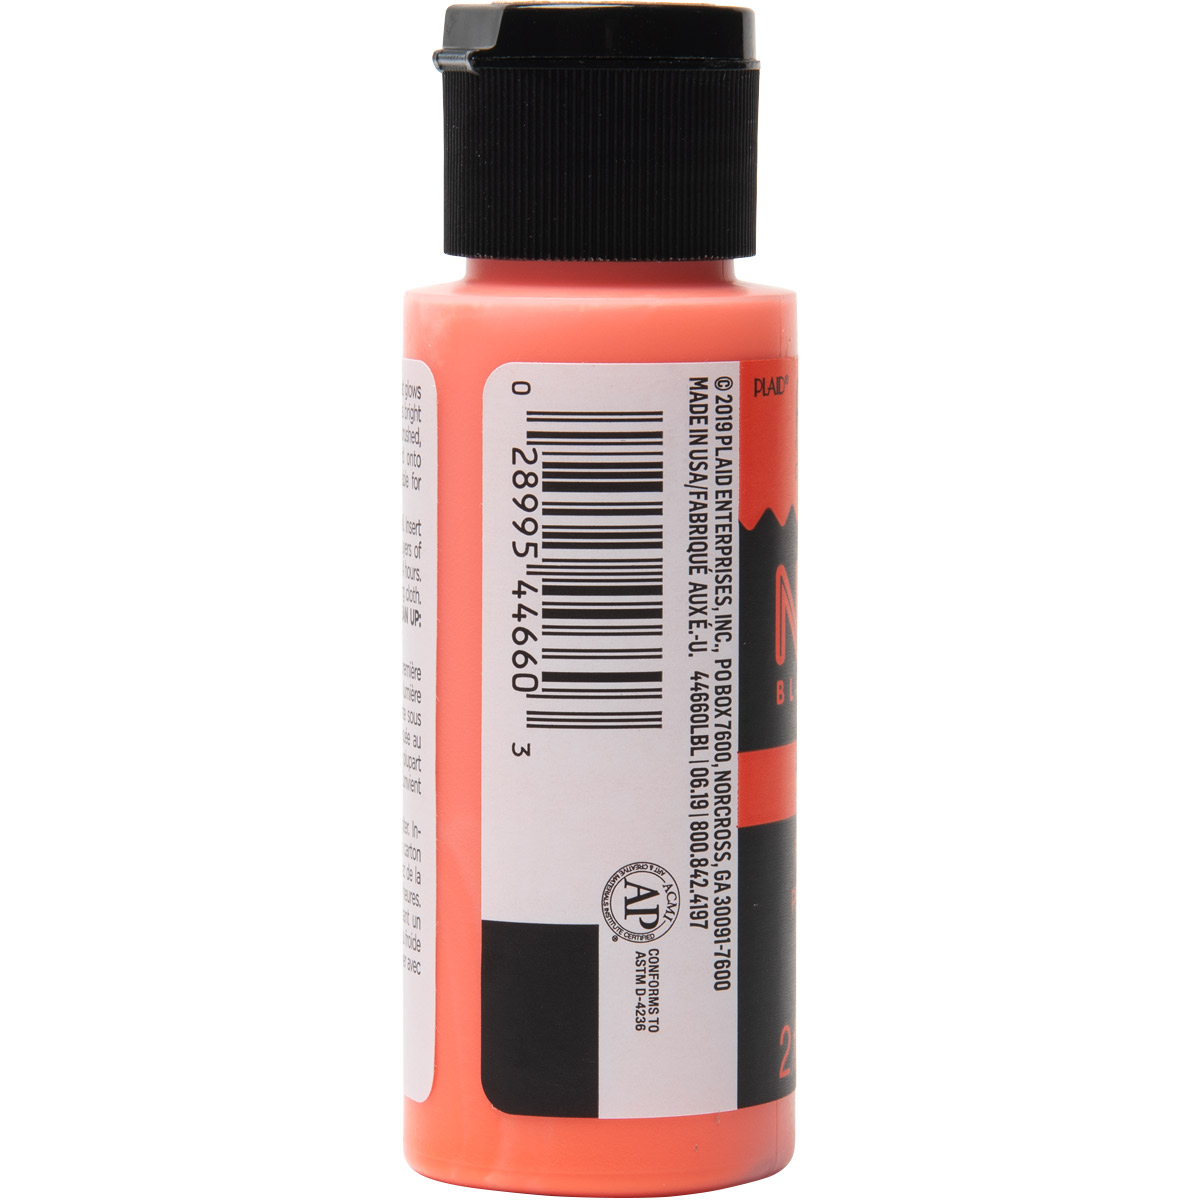 Fabric Creations™ Neon Black Light Fabric Paint - Orange, 2 oz. - 44660